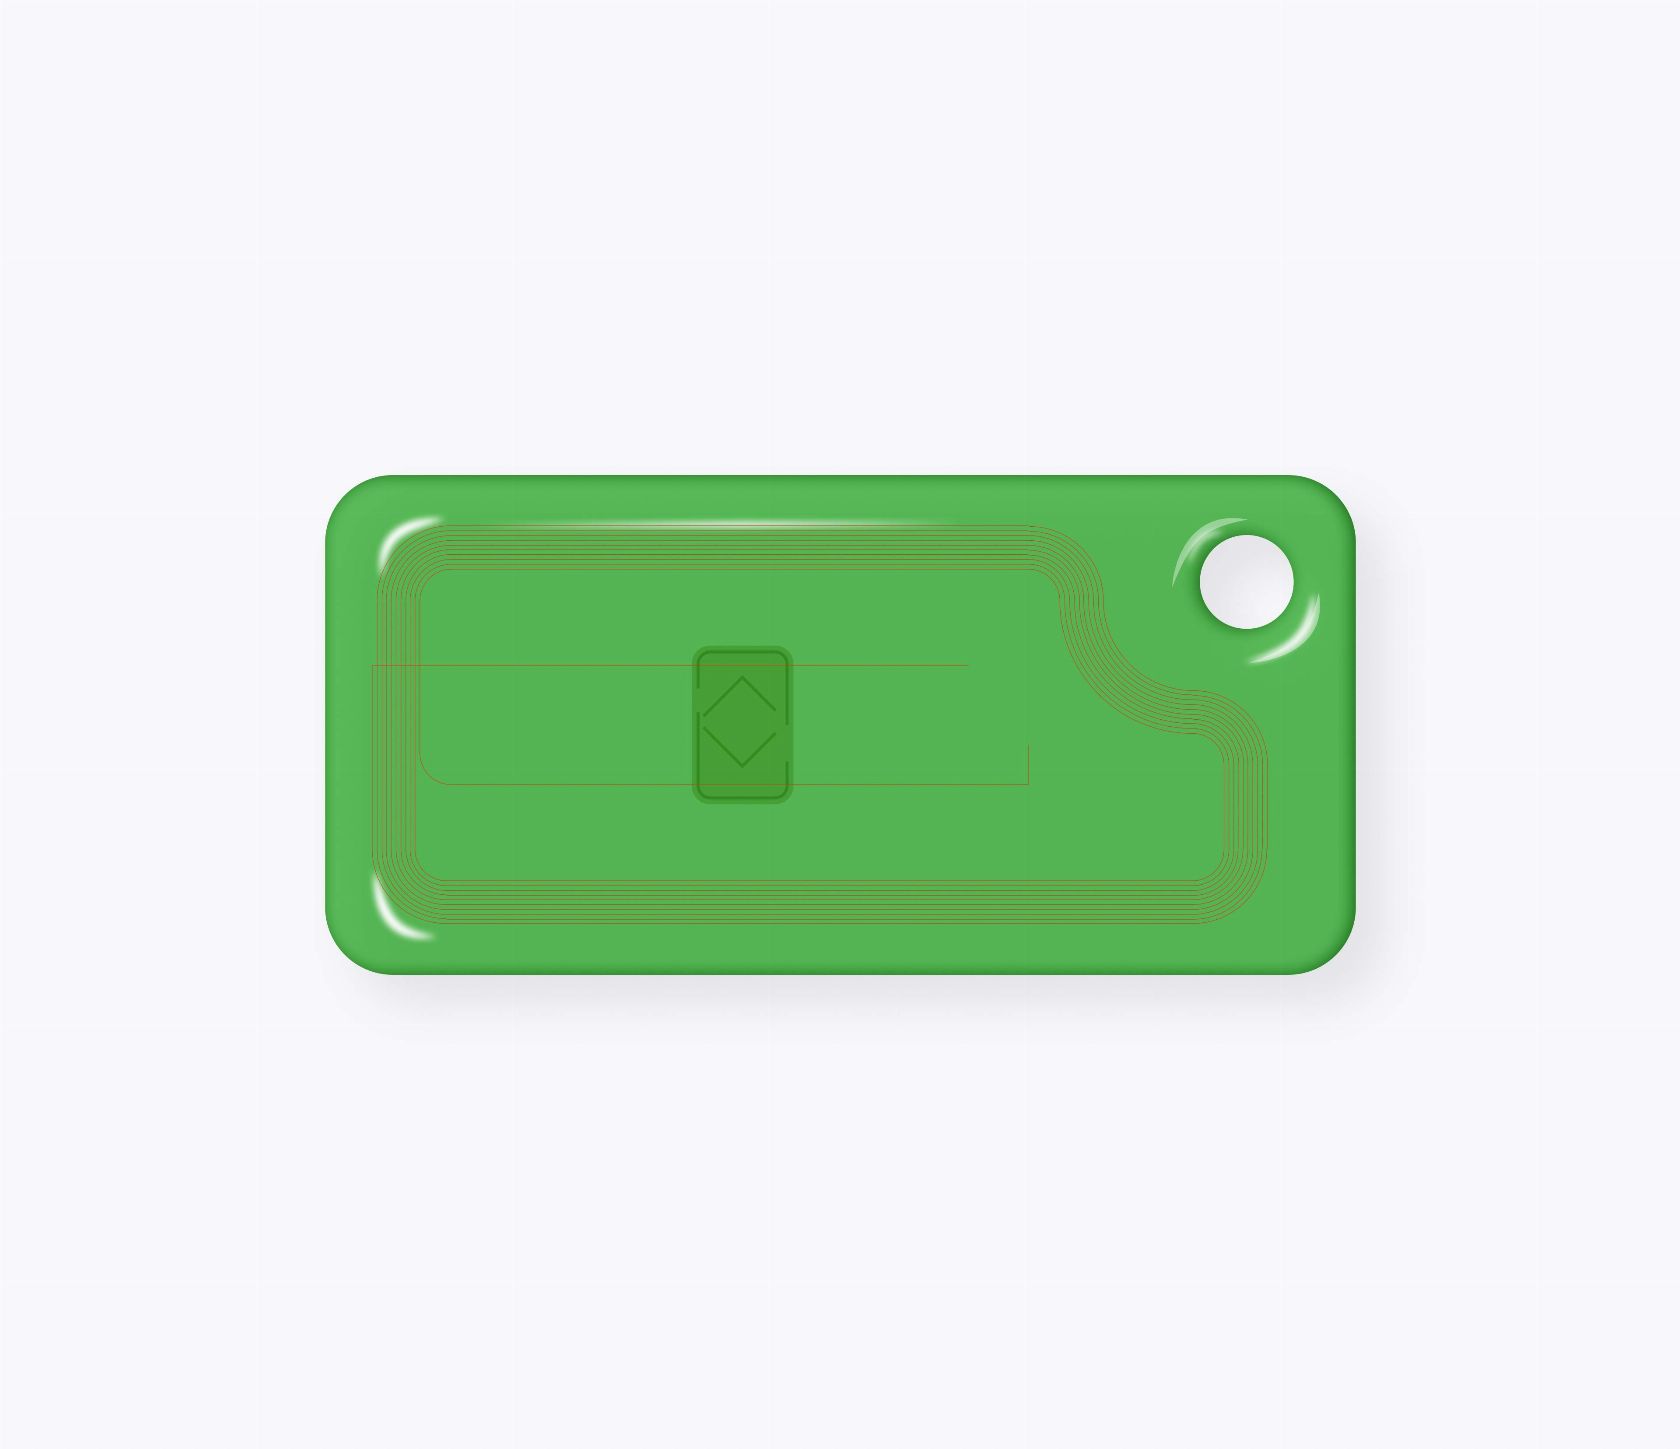 RFID-брелок NEOKEY® Air CARAMEL® (прямоугольной формы) MIFARE 1k 4b nUID прозрачный зеленый